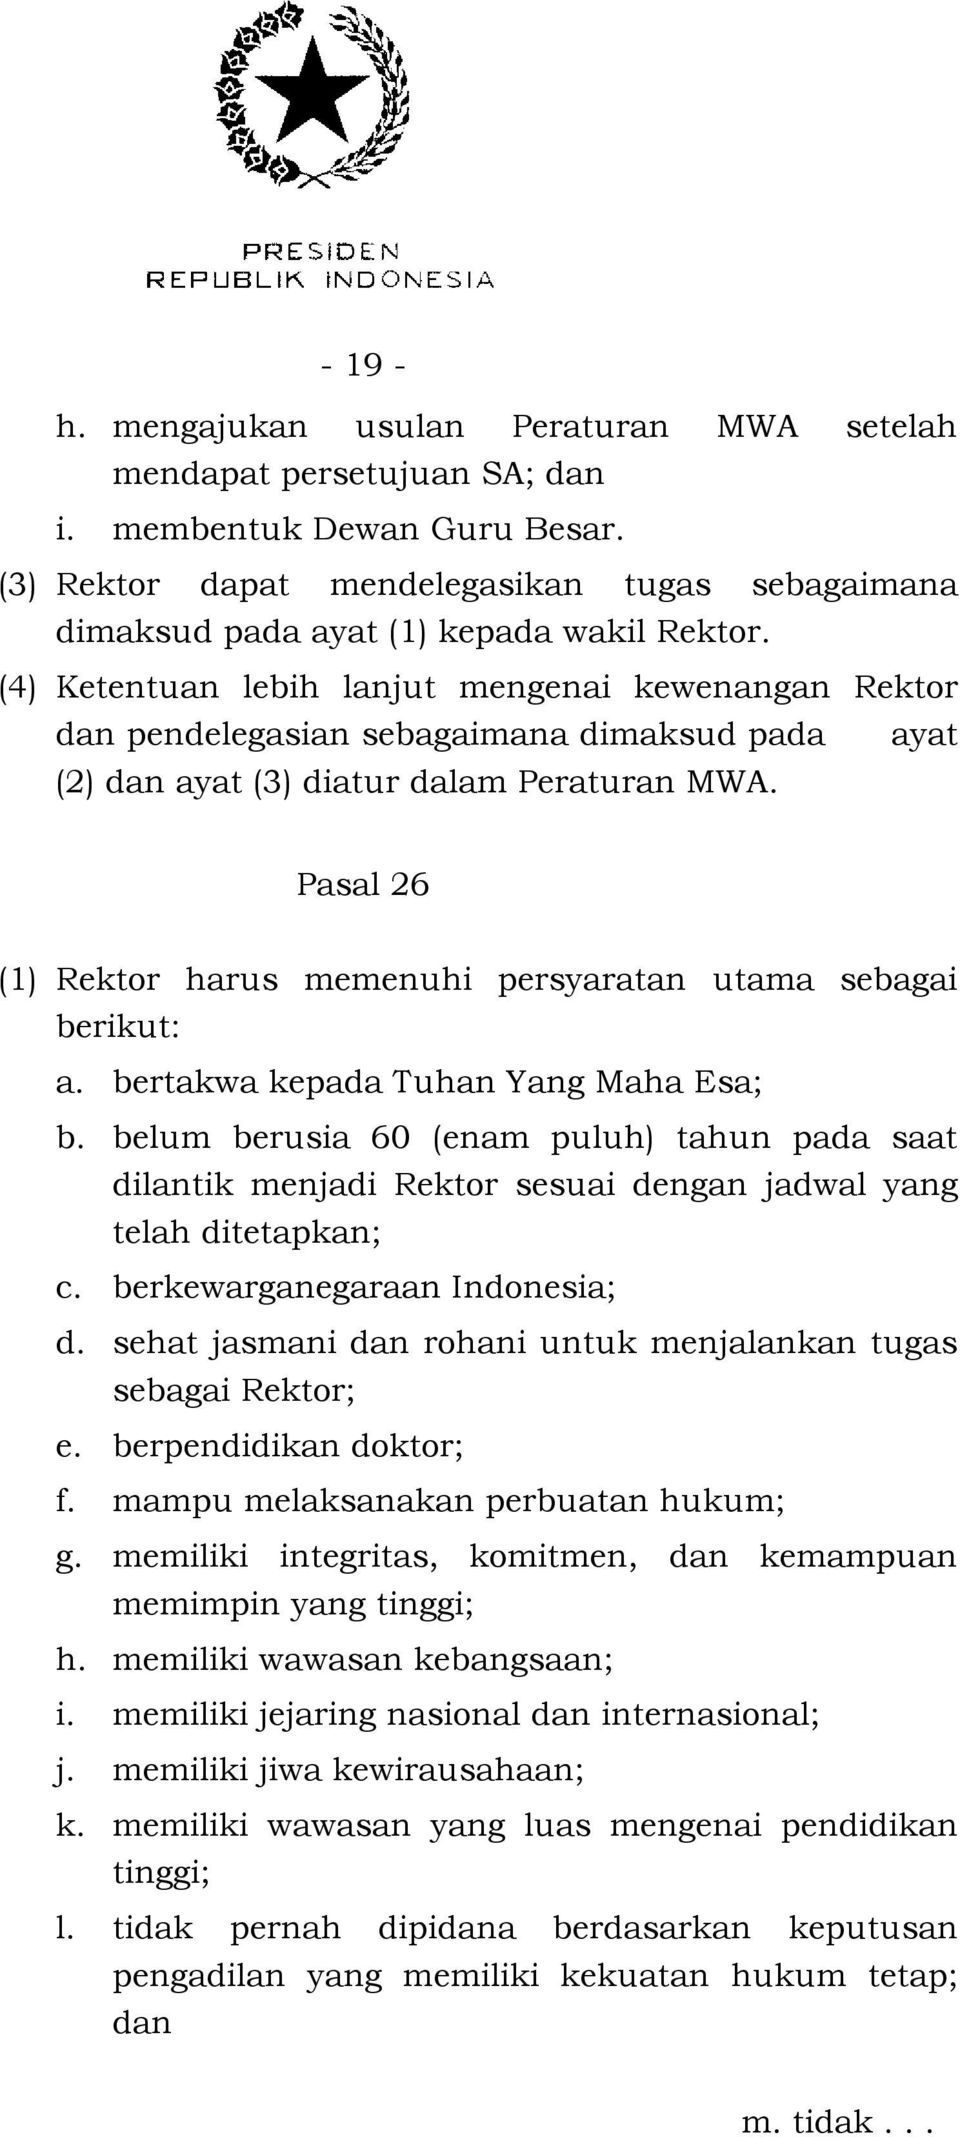 (4) Ketentuan lebih lanjut mengenai kewenangan Rektor dan pendelegasian sebagaimana dimaksud pada ayat (2) dan ayat (3) diatur dalam Peraturan MWA.